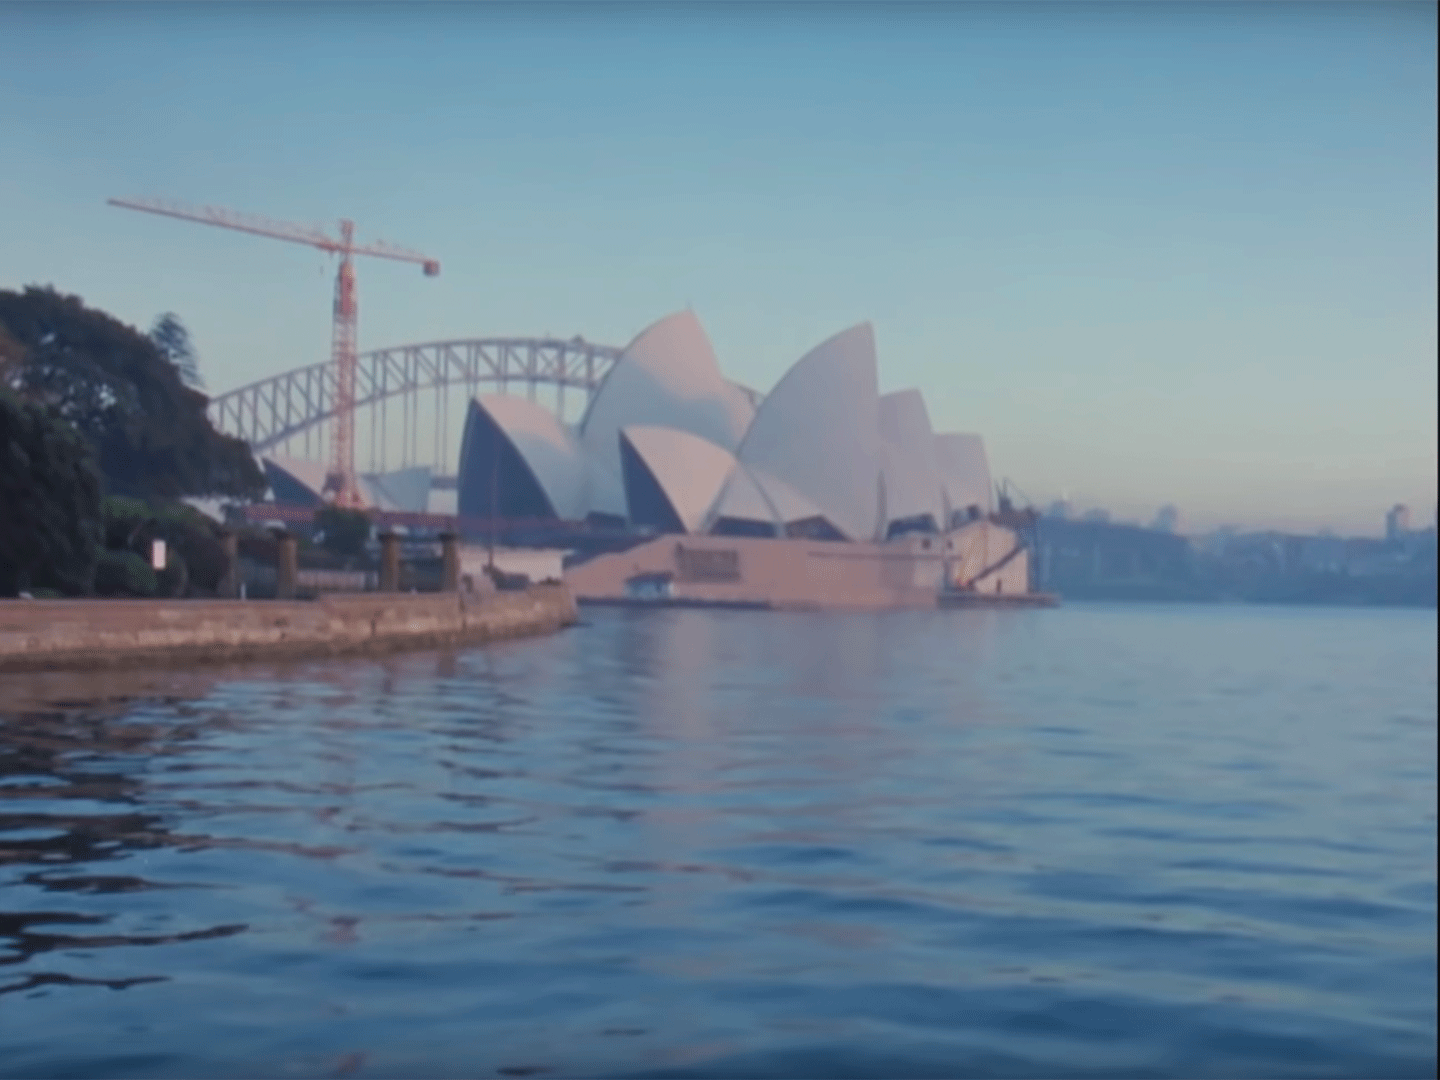 Film still from Autopsy of a Dream, the Sydney Opera House documentary 